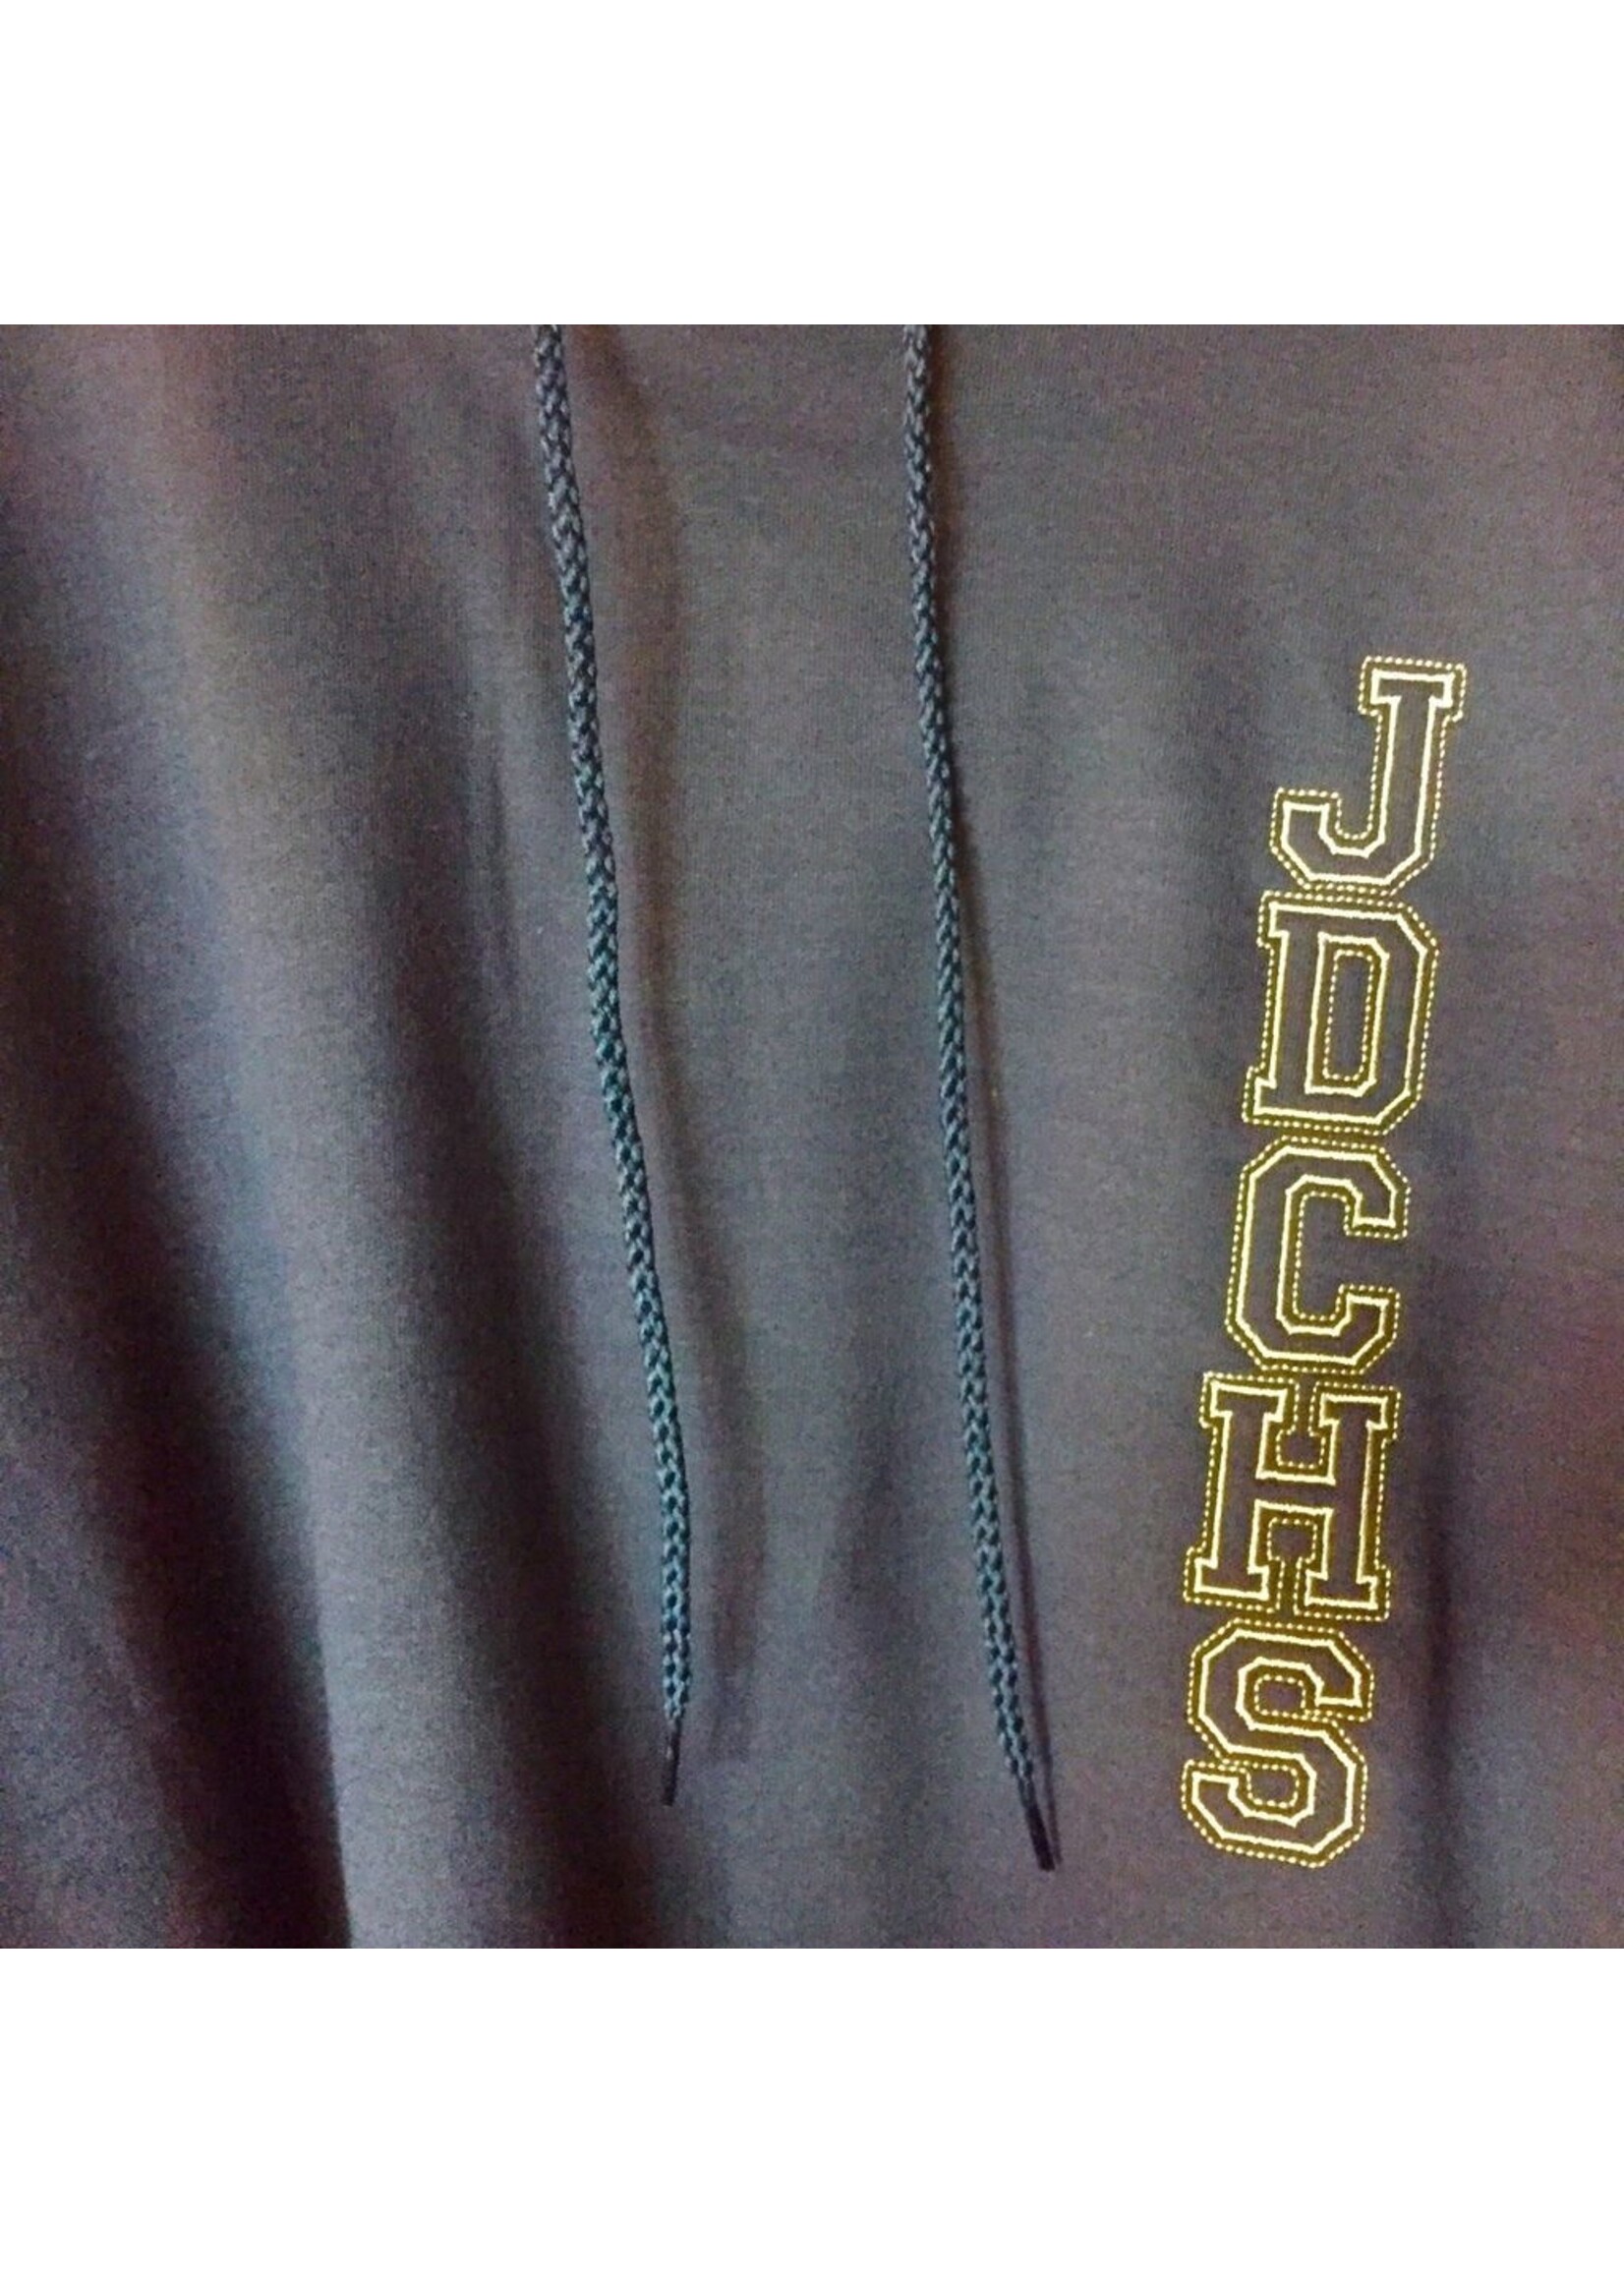 NON-UNIFORM Sweatshirt - JDCHS Hooded Pullover w/vertical logo left front